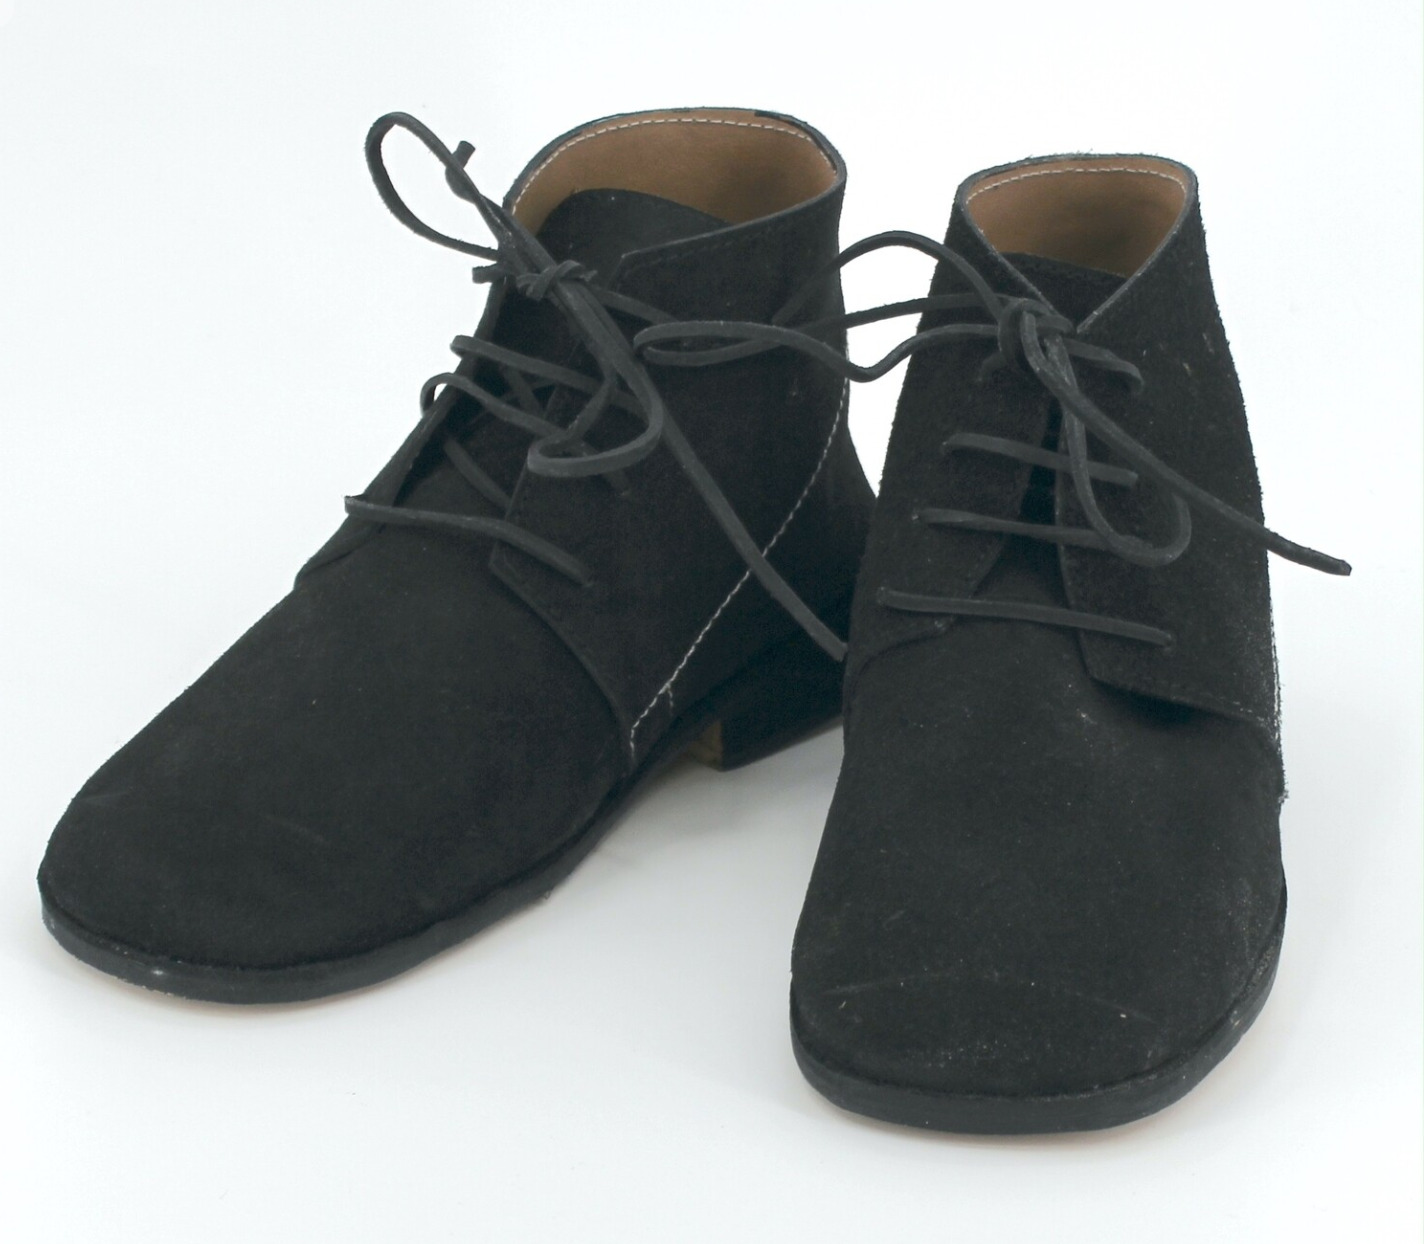 Civil War Brogans / Boots / Shoes - Union And Confederate Reenactment - Size 12